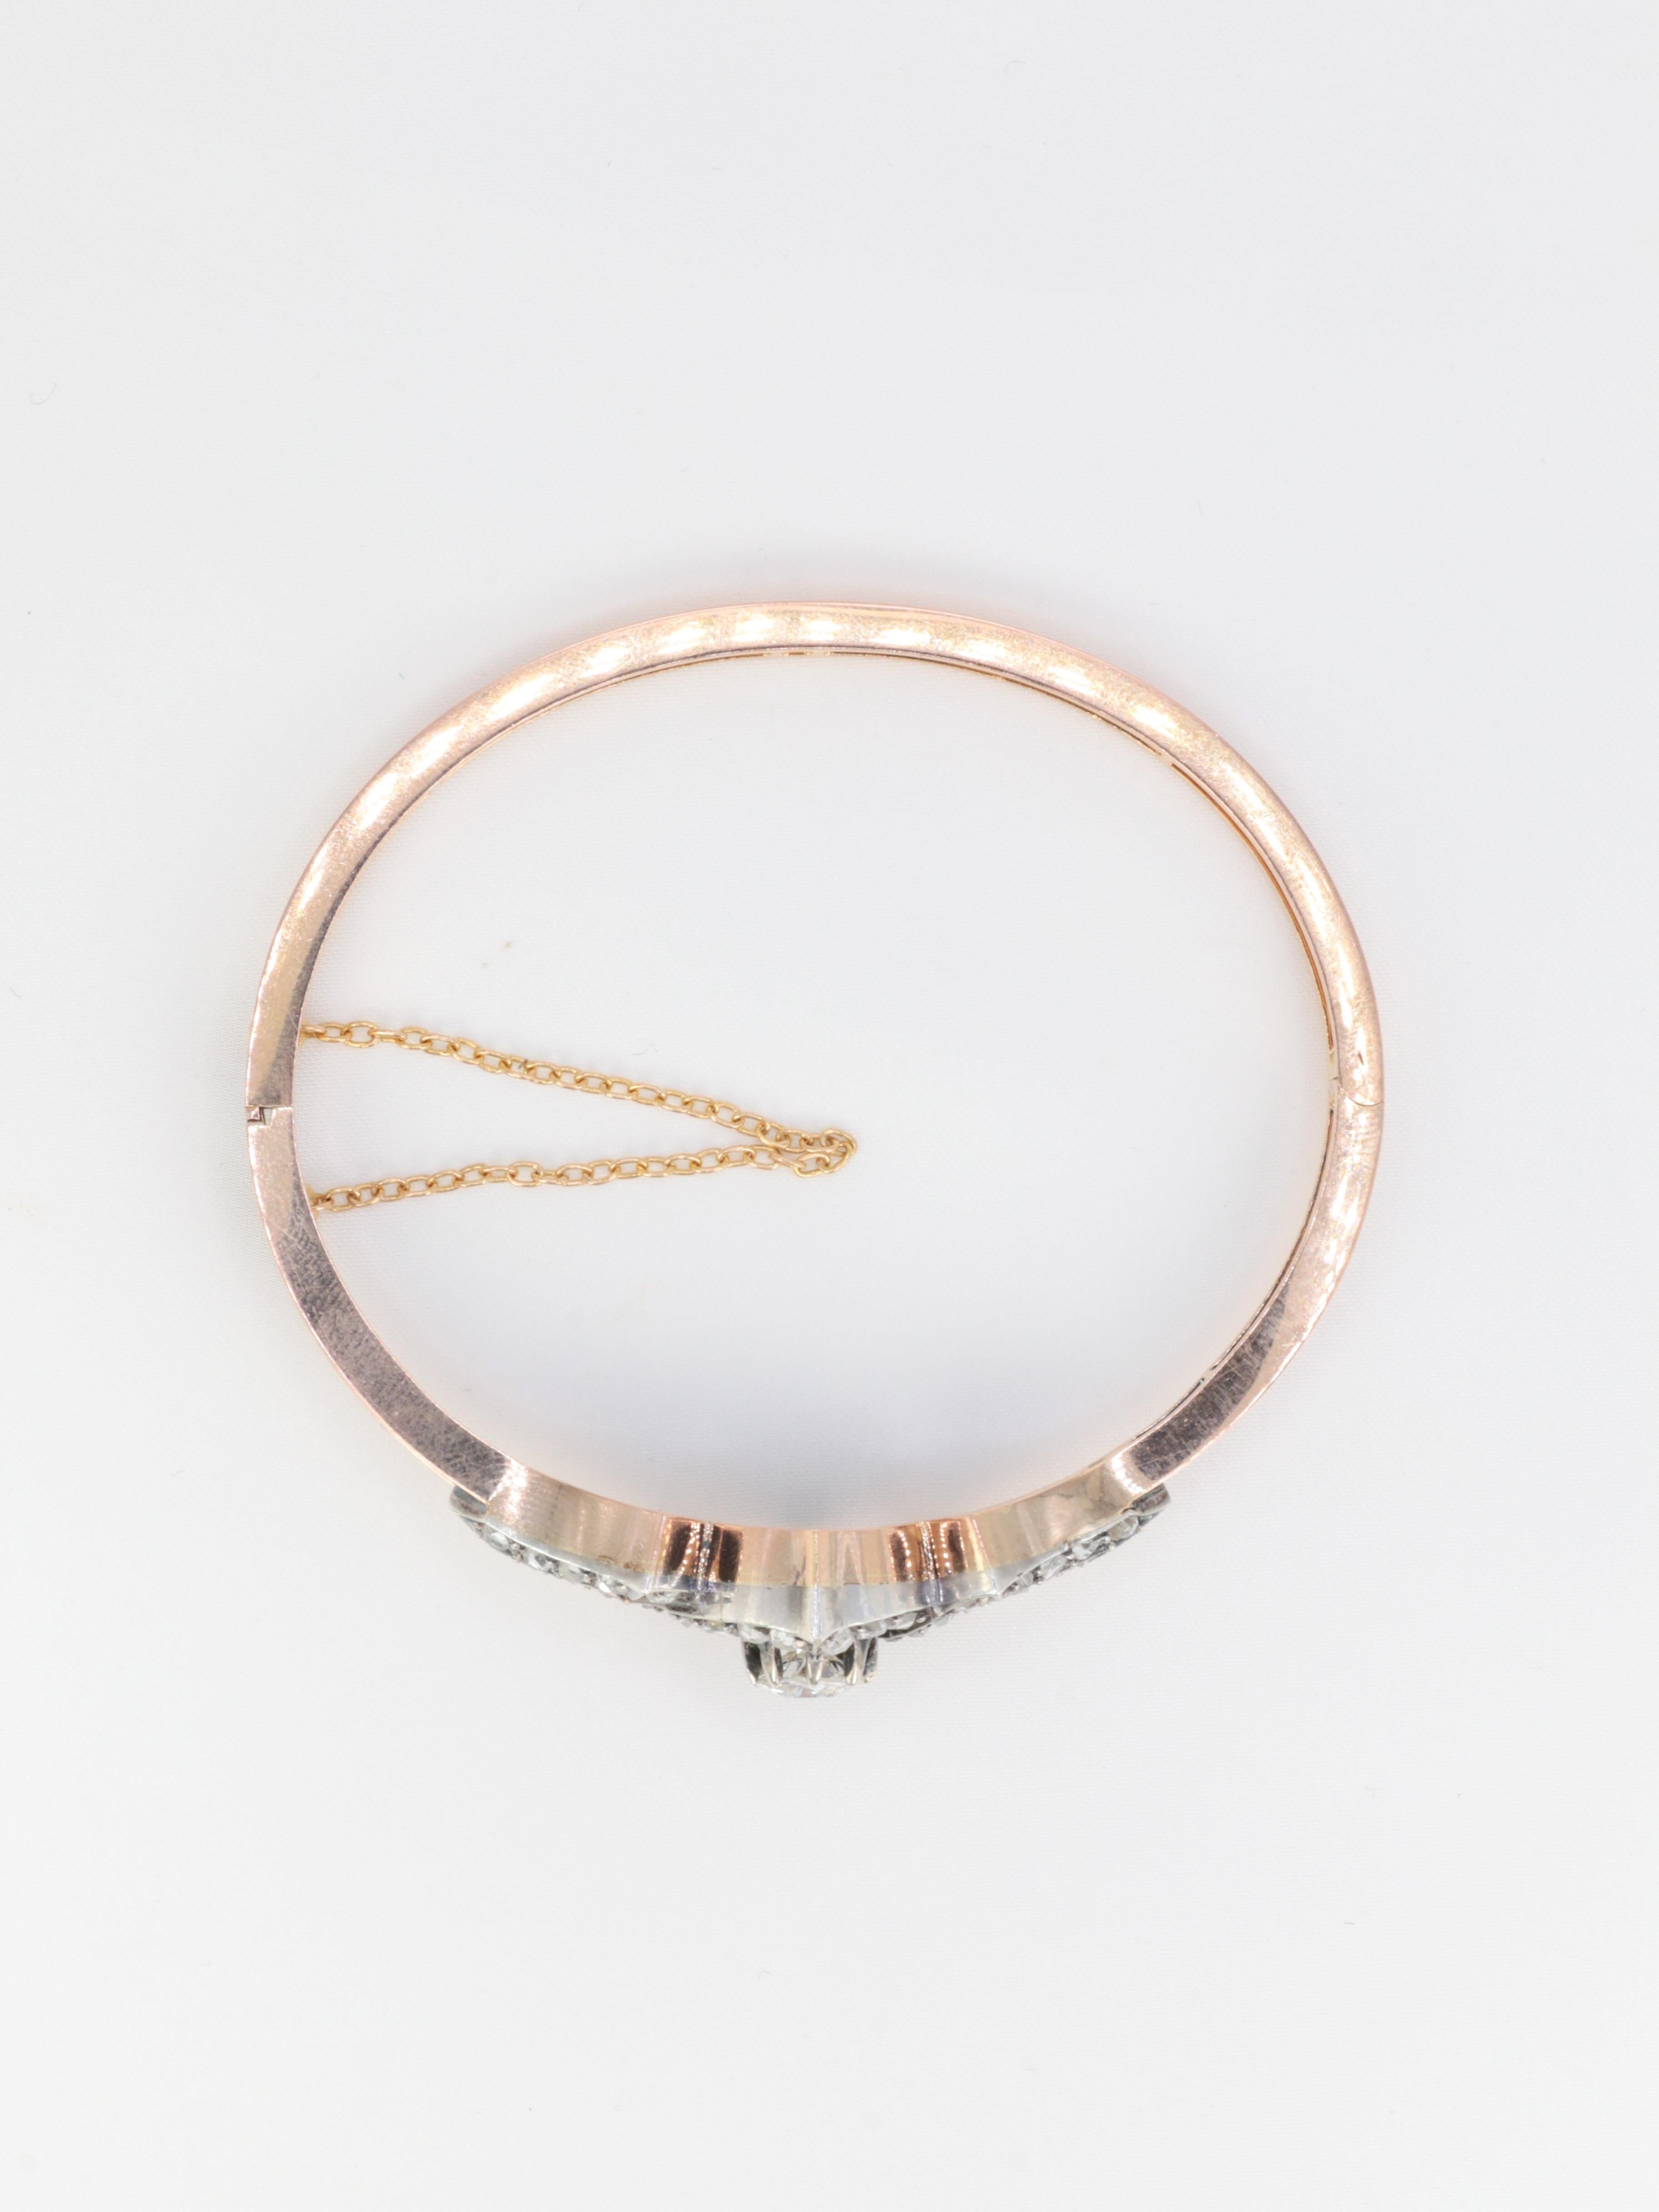 Rose Gold Antique Bangle Bracelet Set with Old Mine Cut Diamonds, Late 19th C. For Sale 10